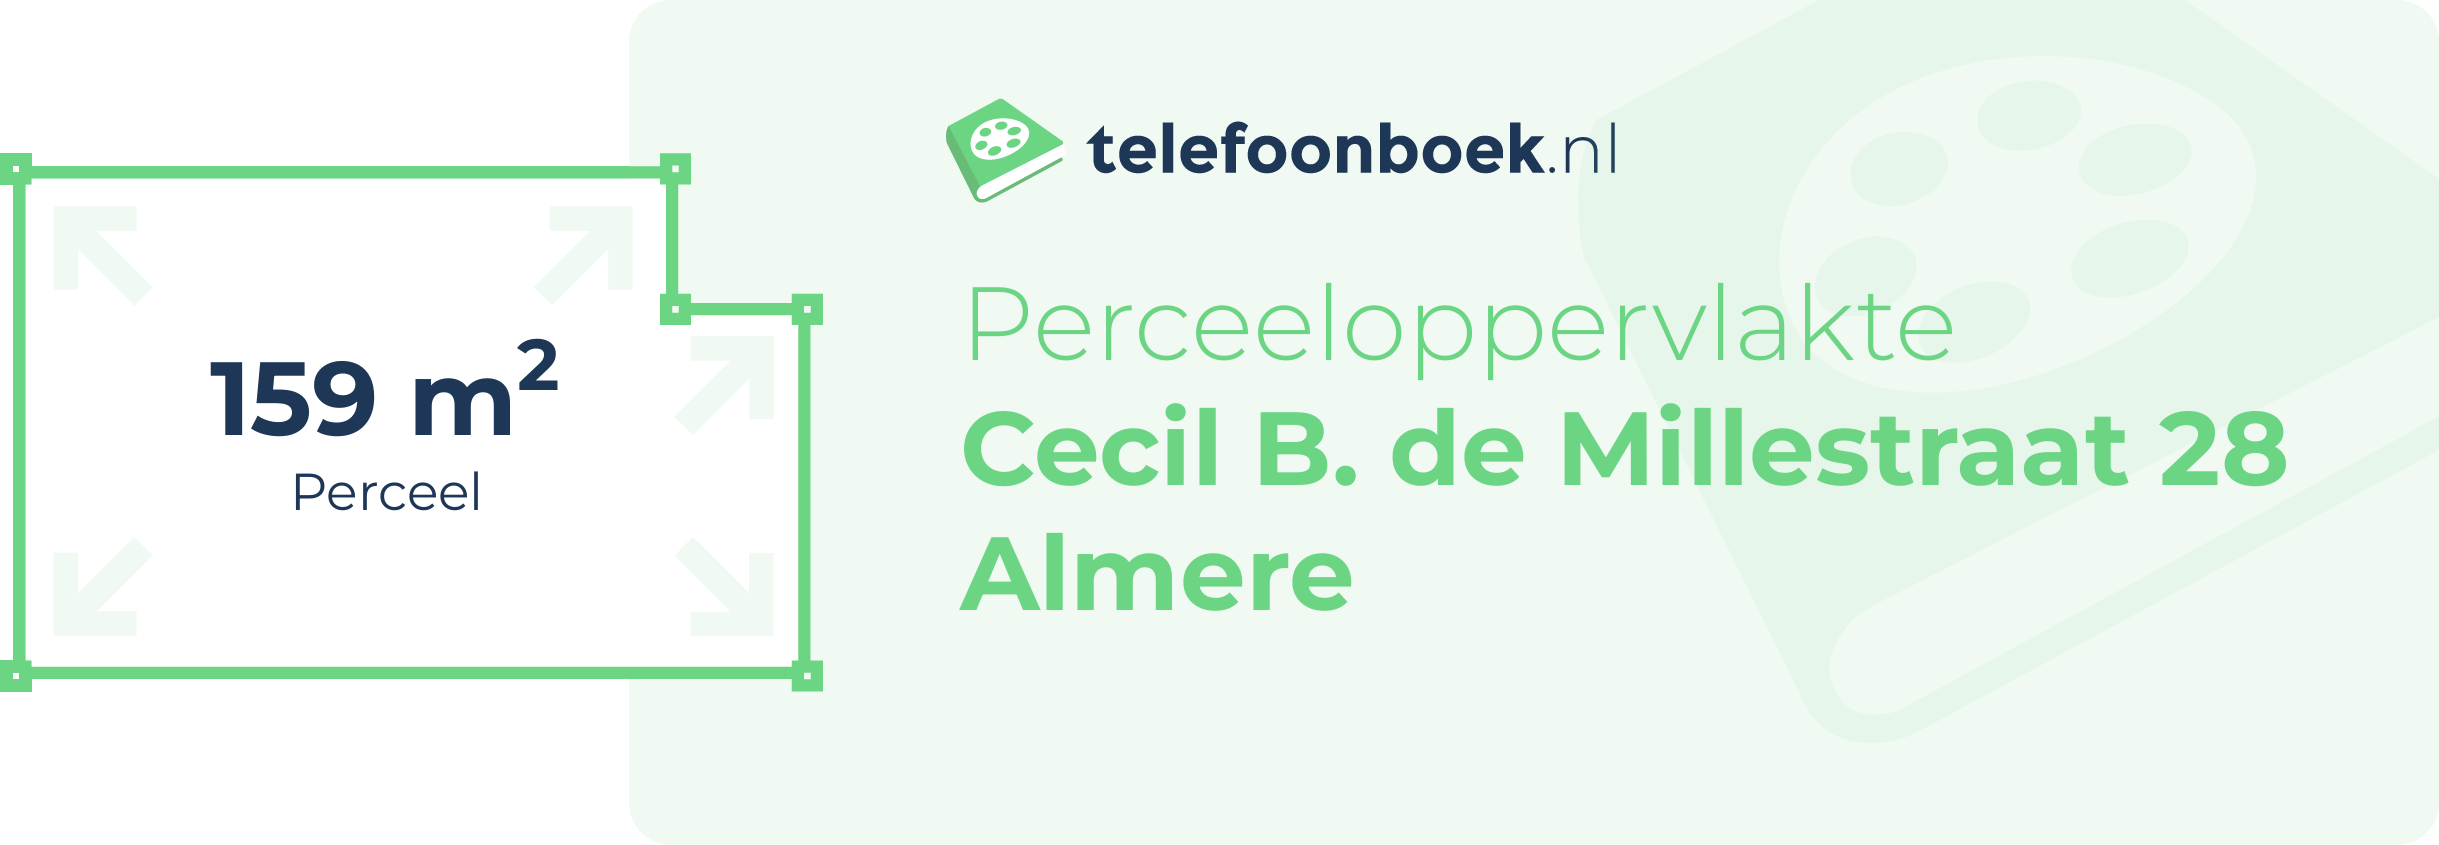 Perceeloppervlakte Cecil B. De Millestraat 28 Almere